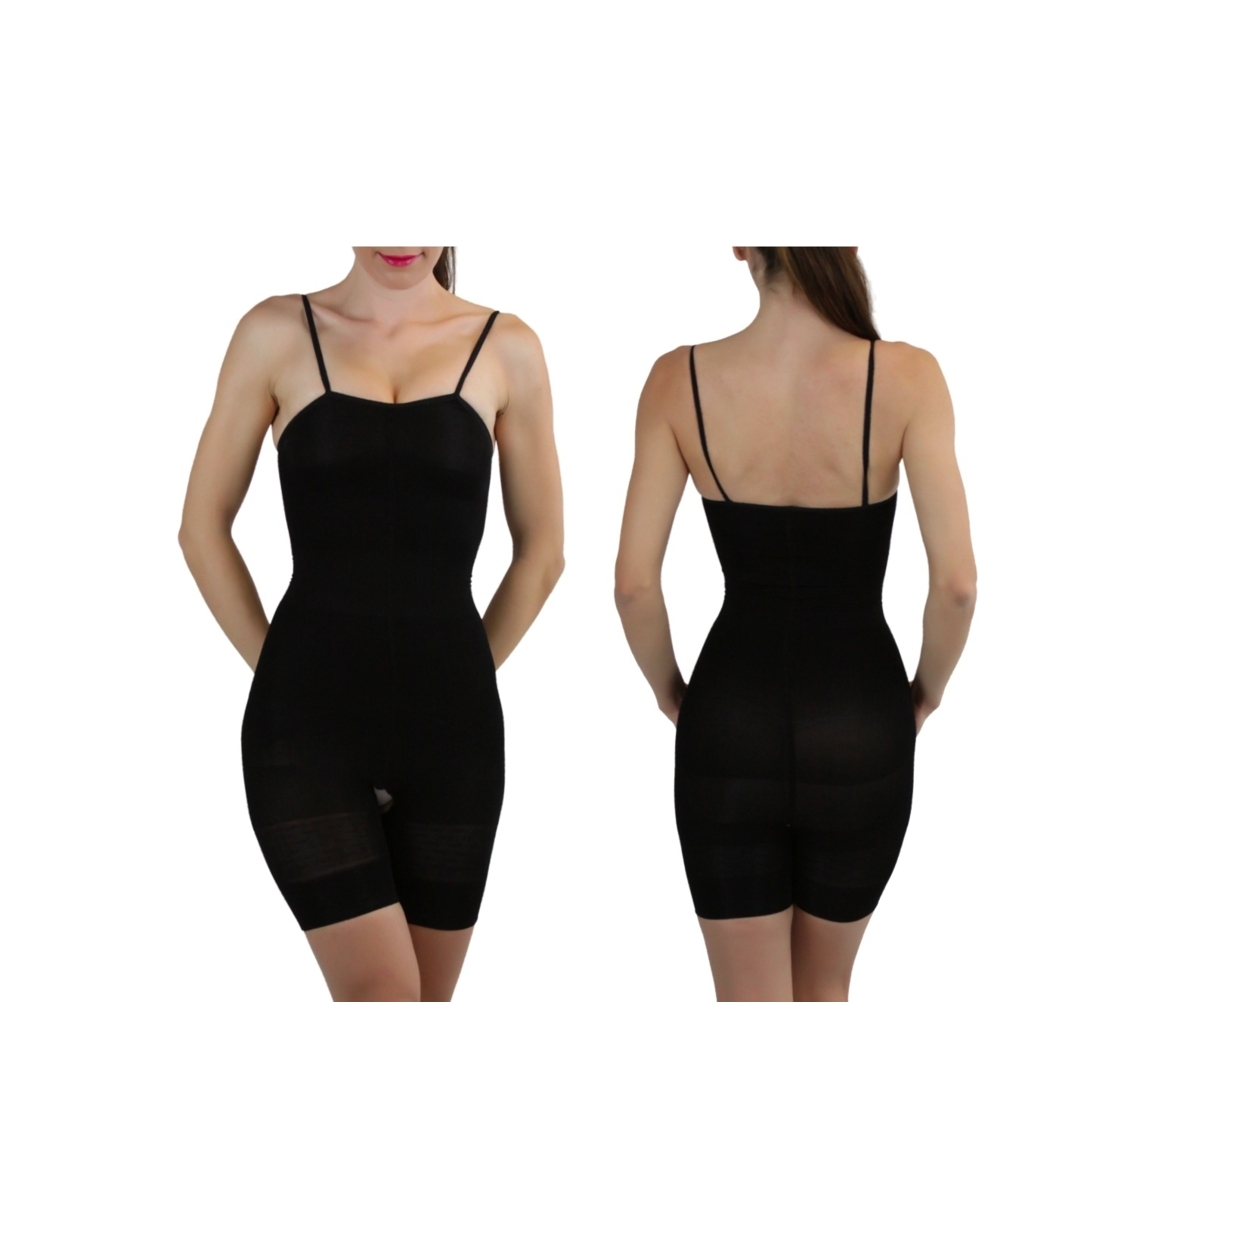 Women's Slimming Body Suit - Black, M